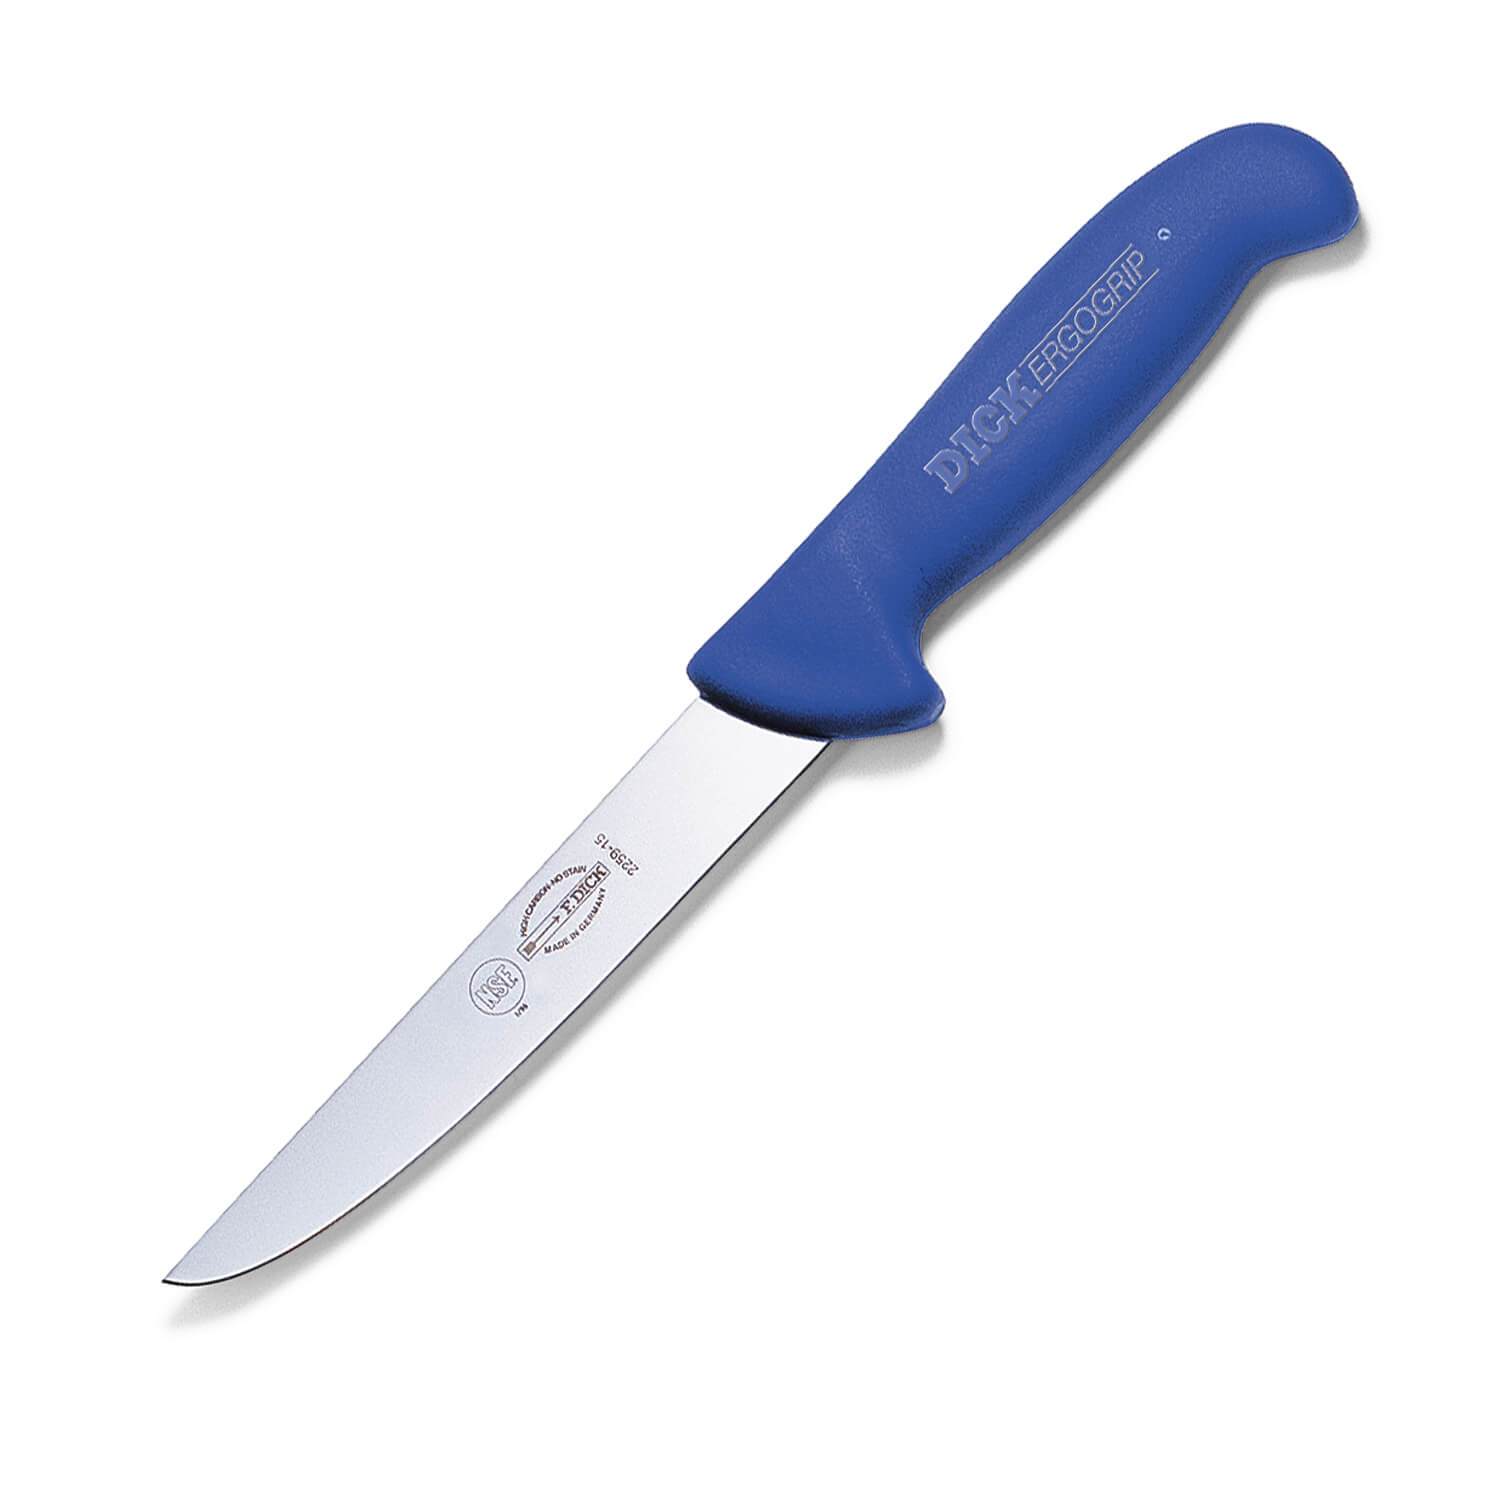 F Dick Ergogrip Knife Blue 3 PC Set